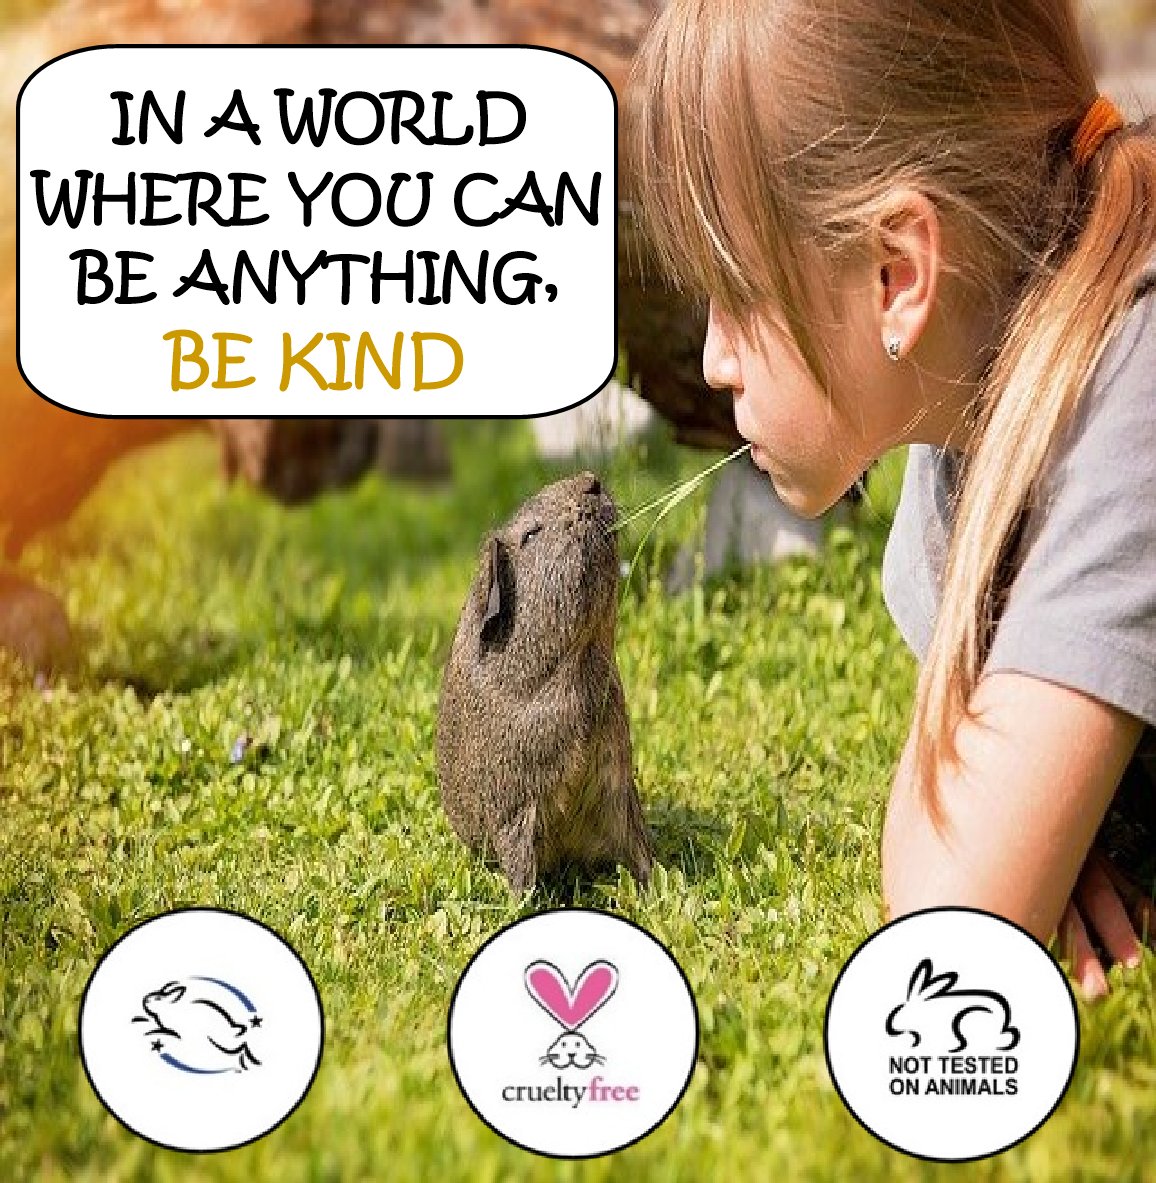 #crueltyfree #compassion #bananimaltesting #bekindtoallkinds #bethechange